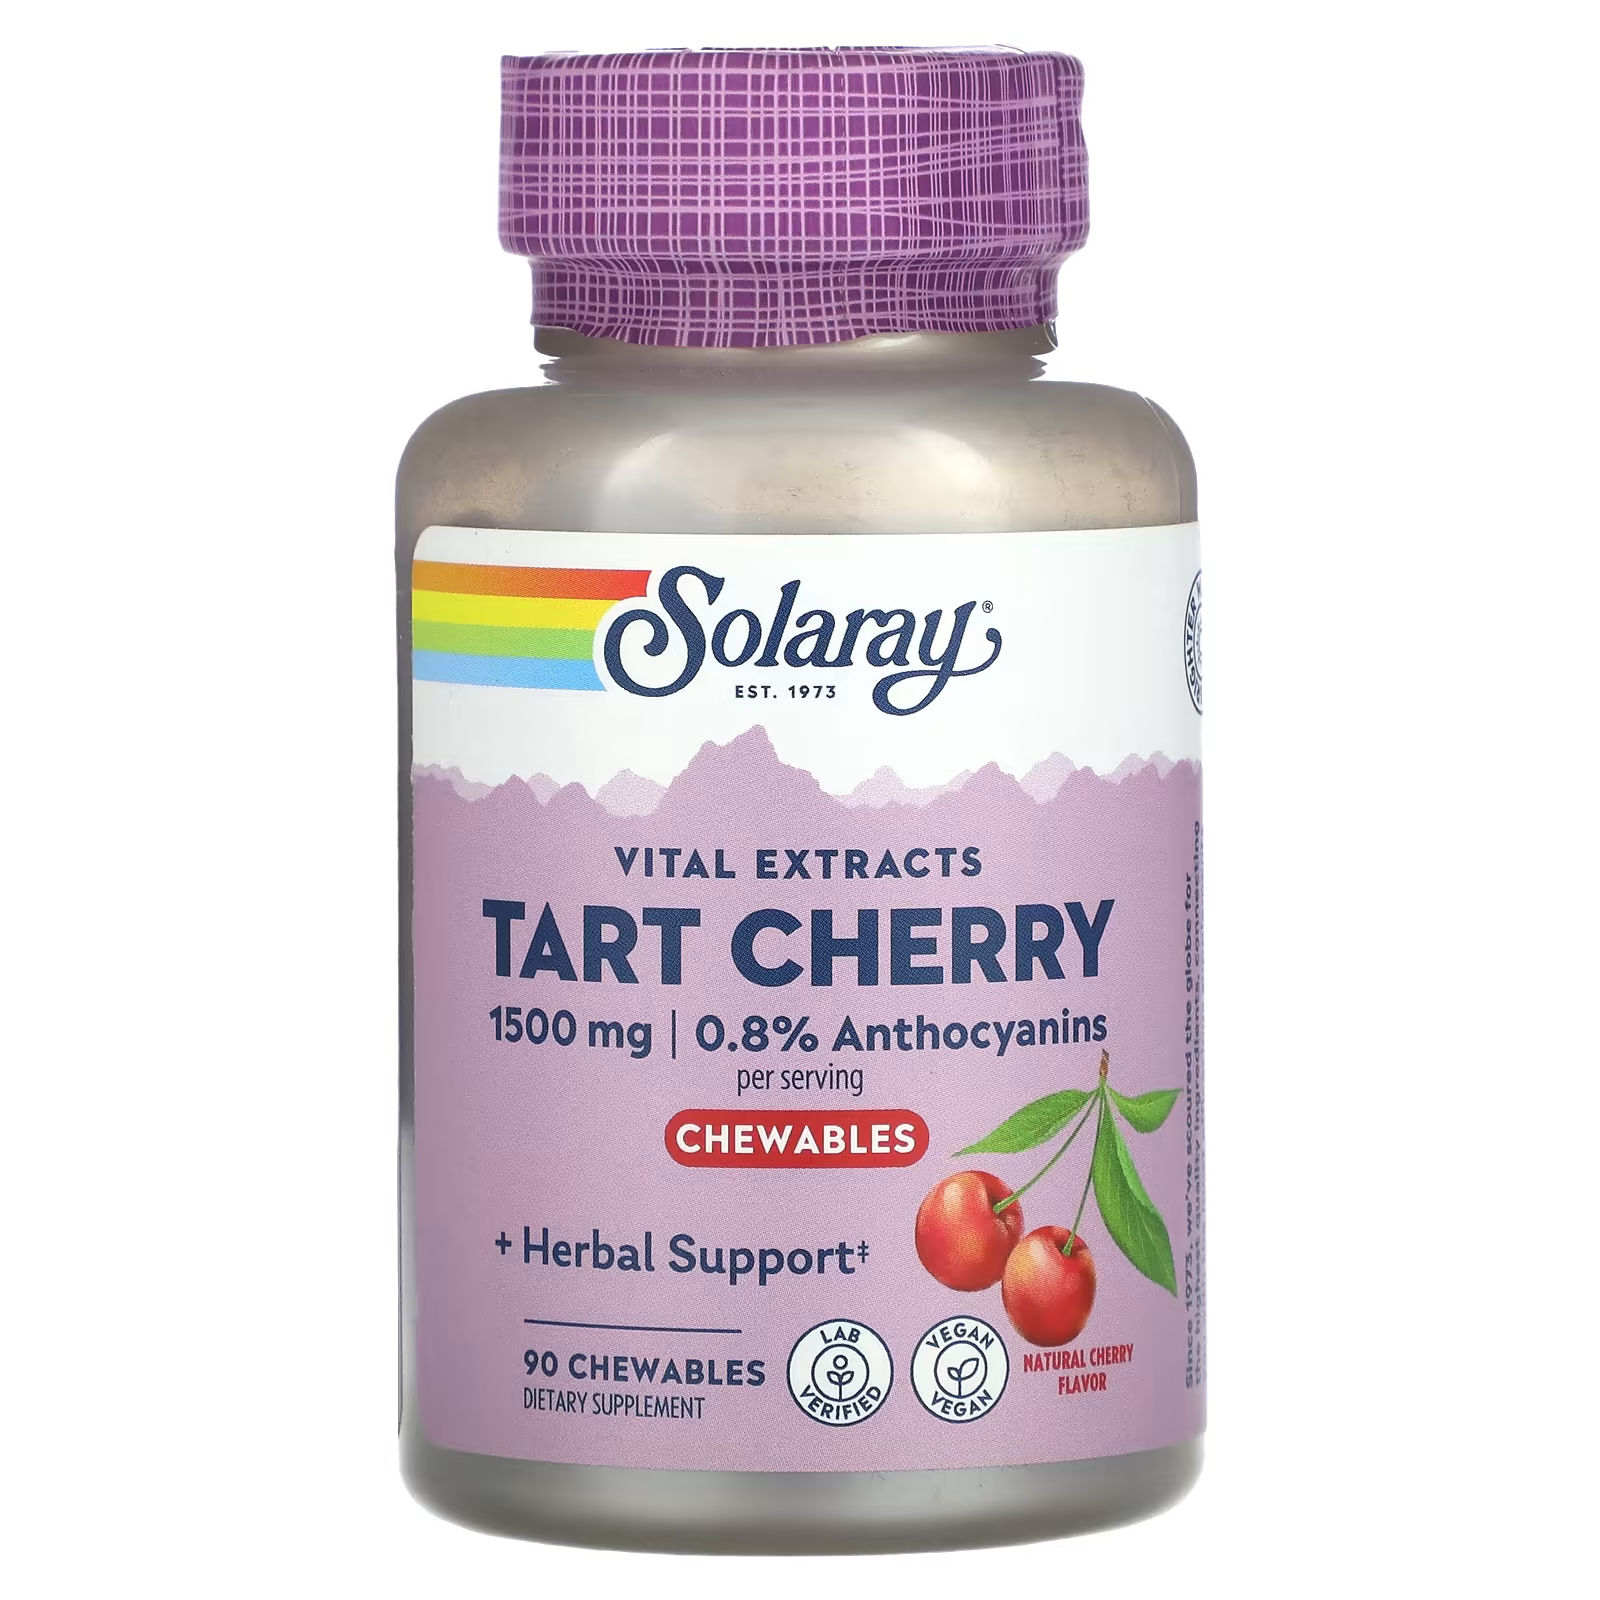 Пищевая добавка Solaray Vital Extracts Tart Cherry, натуральная вишня, 90 жевательных таблеток solaray vital extracts juice concentrate tart cherry 30 g 16 fl oz 473 ml